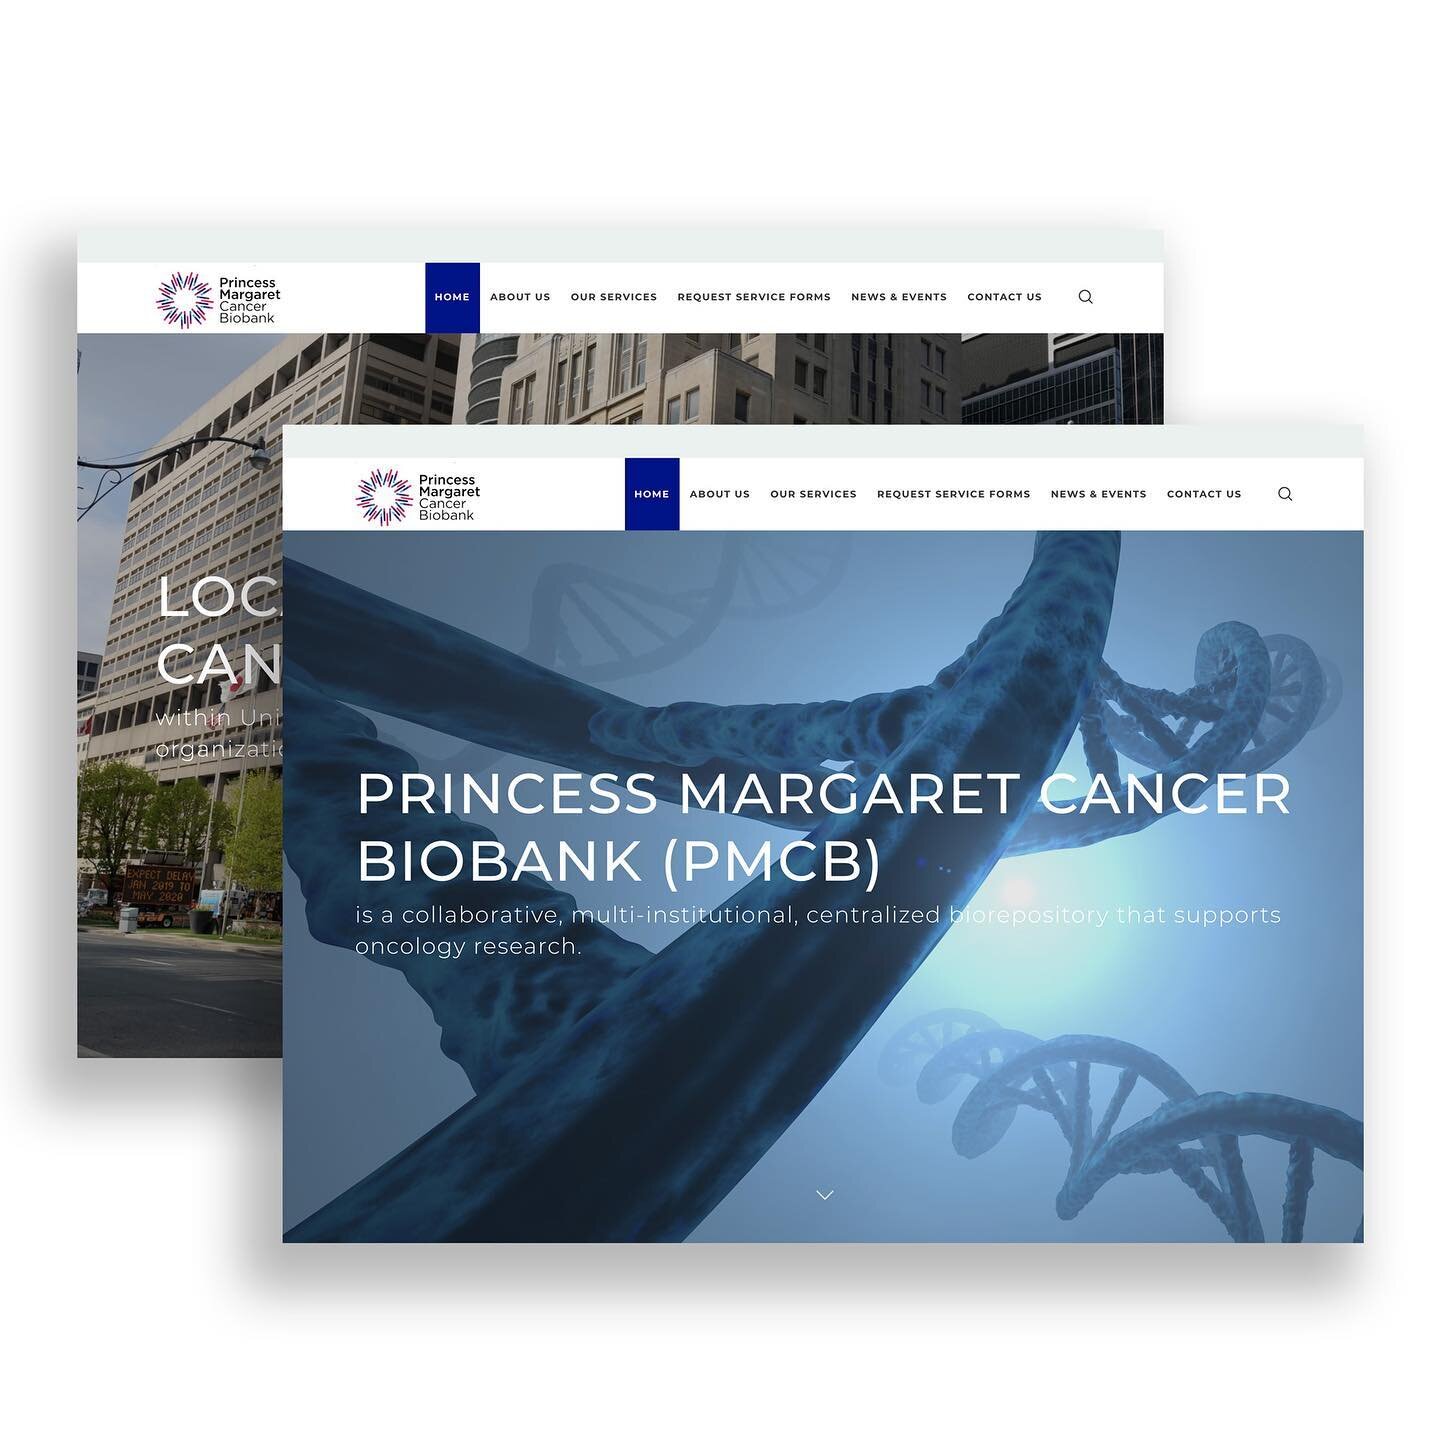 Collaboration was key in designing The New Princess Margaret Cancer Biobank Brand Identity.

#Design #Adobe #Illustrator #Indesign #Creative #Cancer #Biobank #Business #Branding #Graphicdesign #BrandIdentity #RGD #Canada #Partnership #Webdesign #Heal